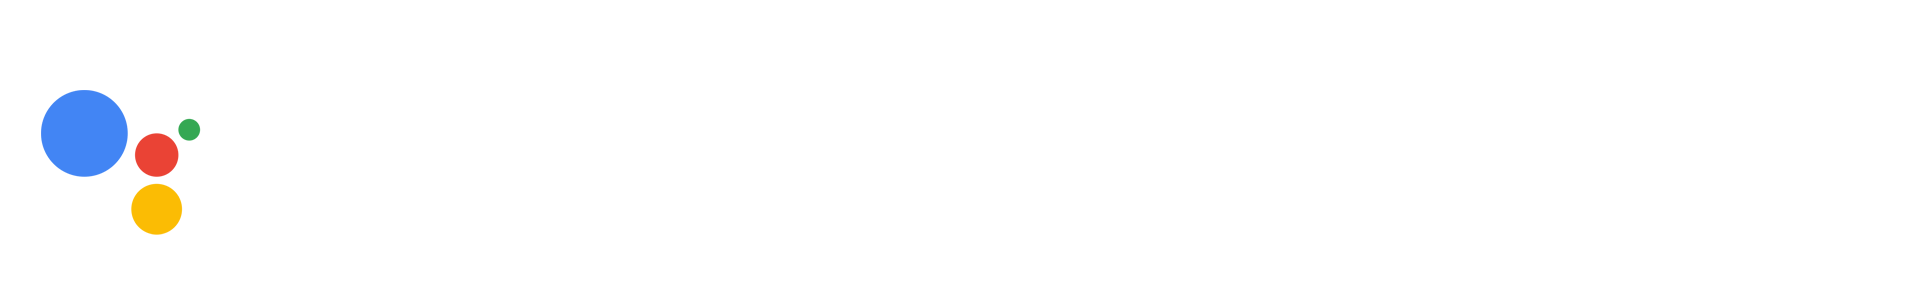 google assistant - soul radio